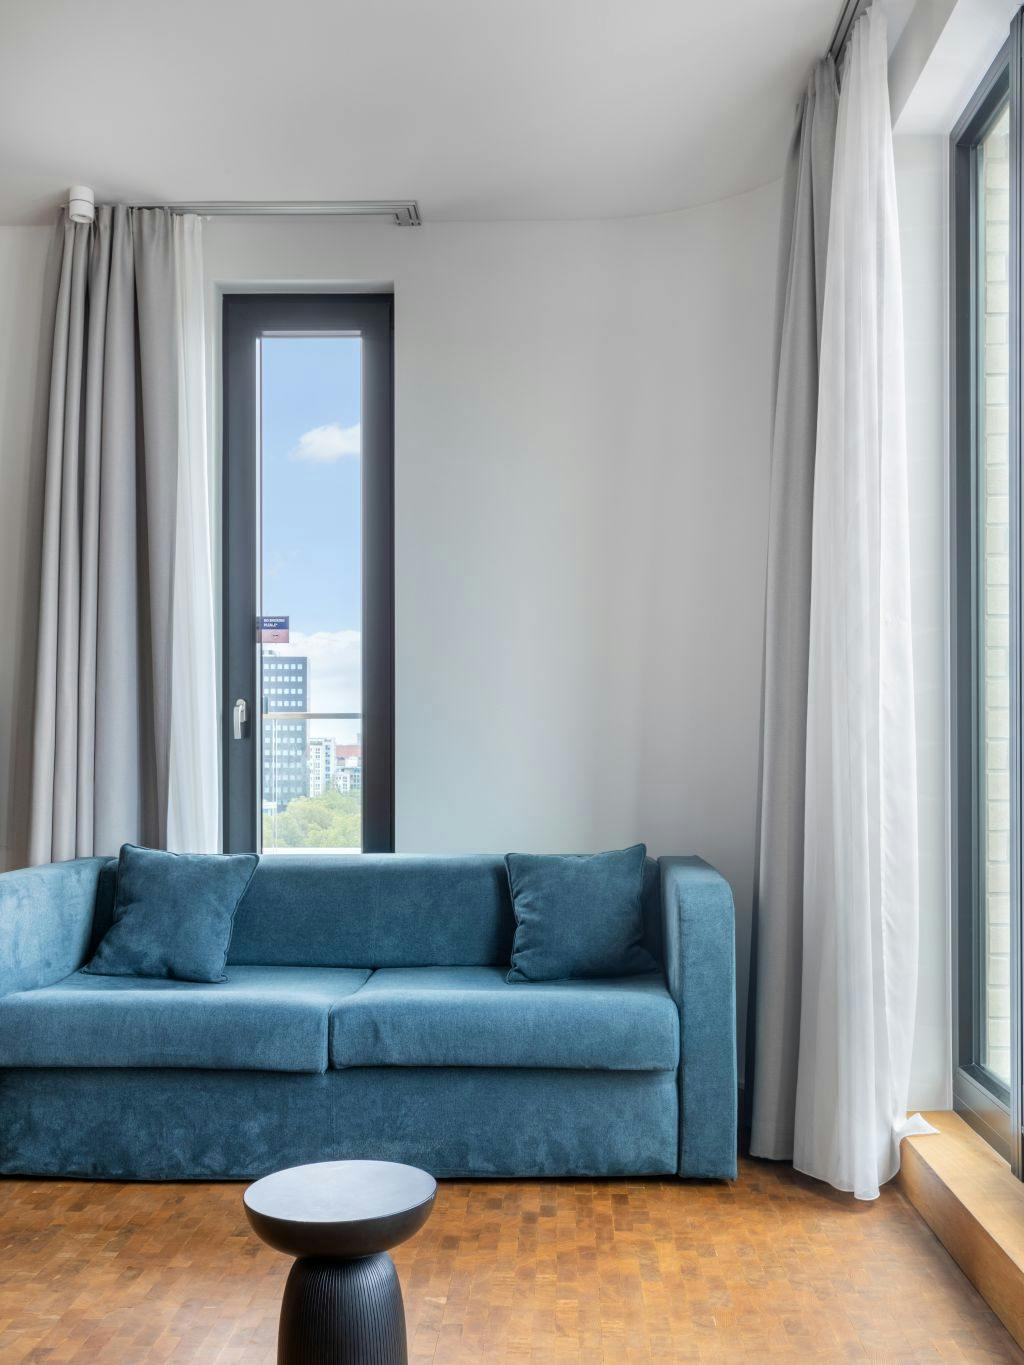 Furnished 52 sqm suites with kitchenette in Berlin Schöneberg with registration